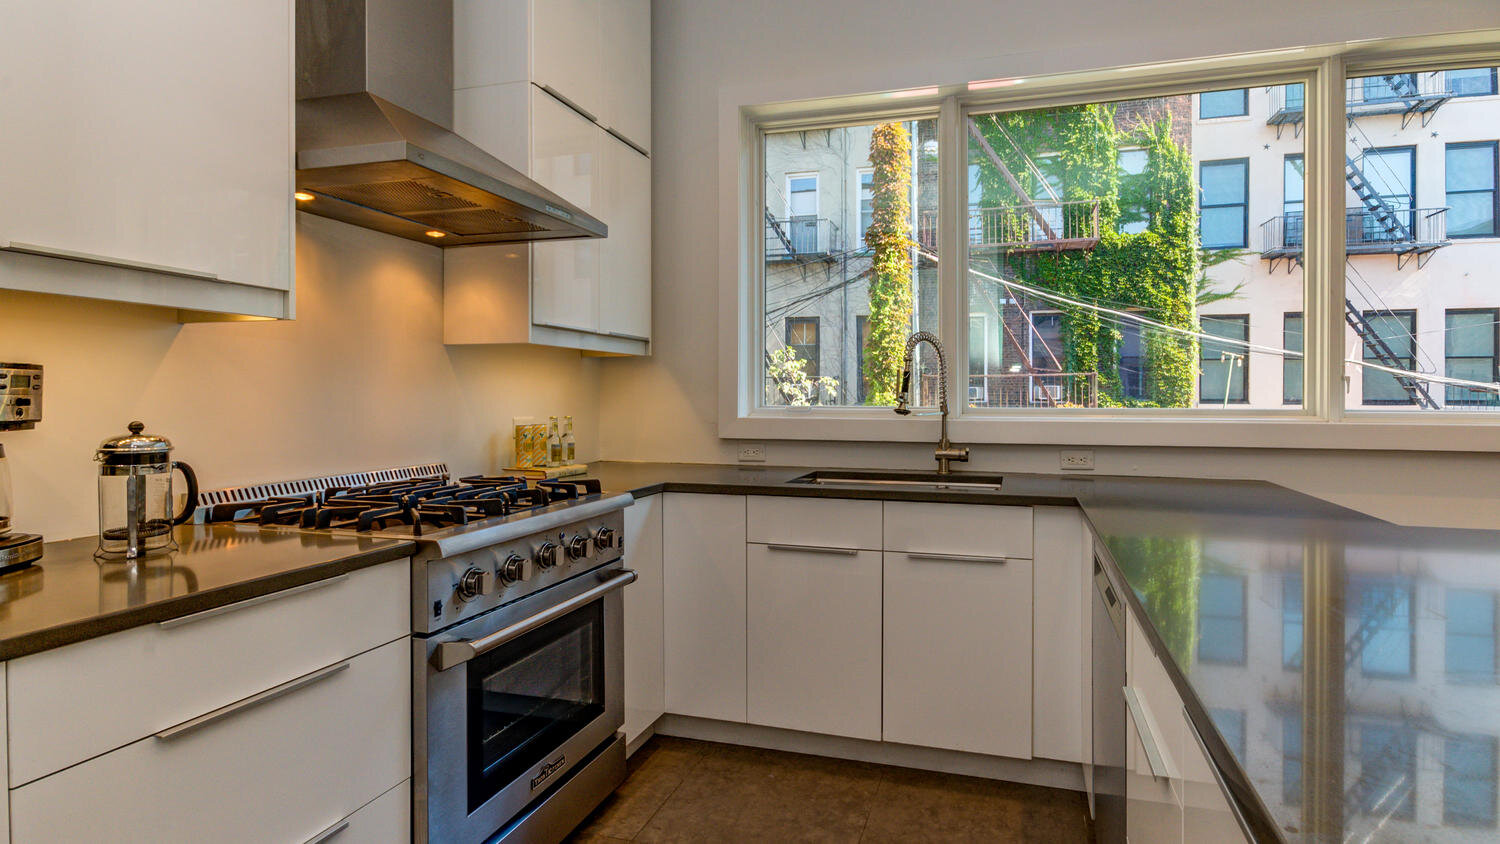 White Cabinet Kitchen Remodel - Whole House Interior Designer in Hoboken NJ - LM Interior Design (1).jpg